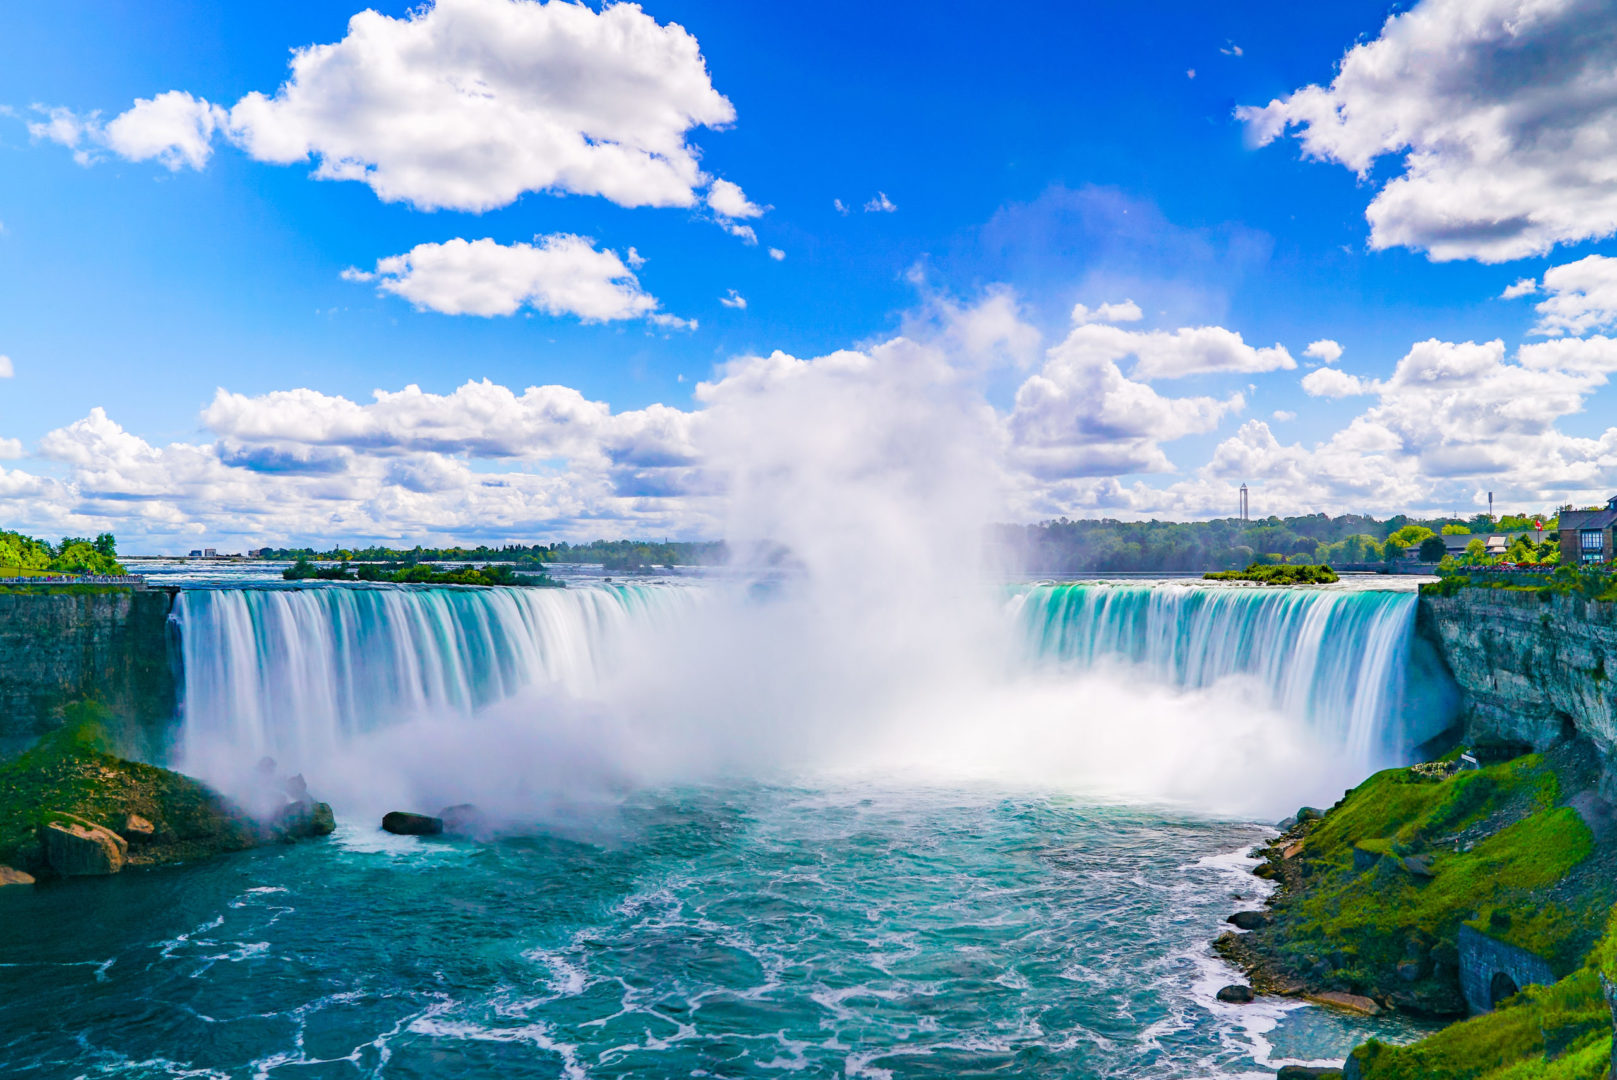 Niagarafälle in Niagara Falls, Kanada